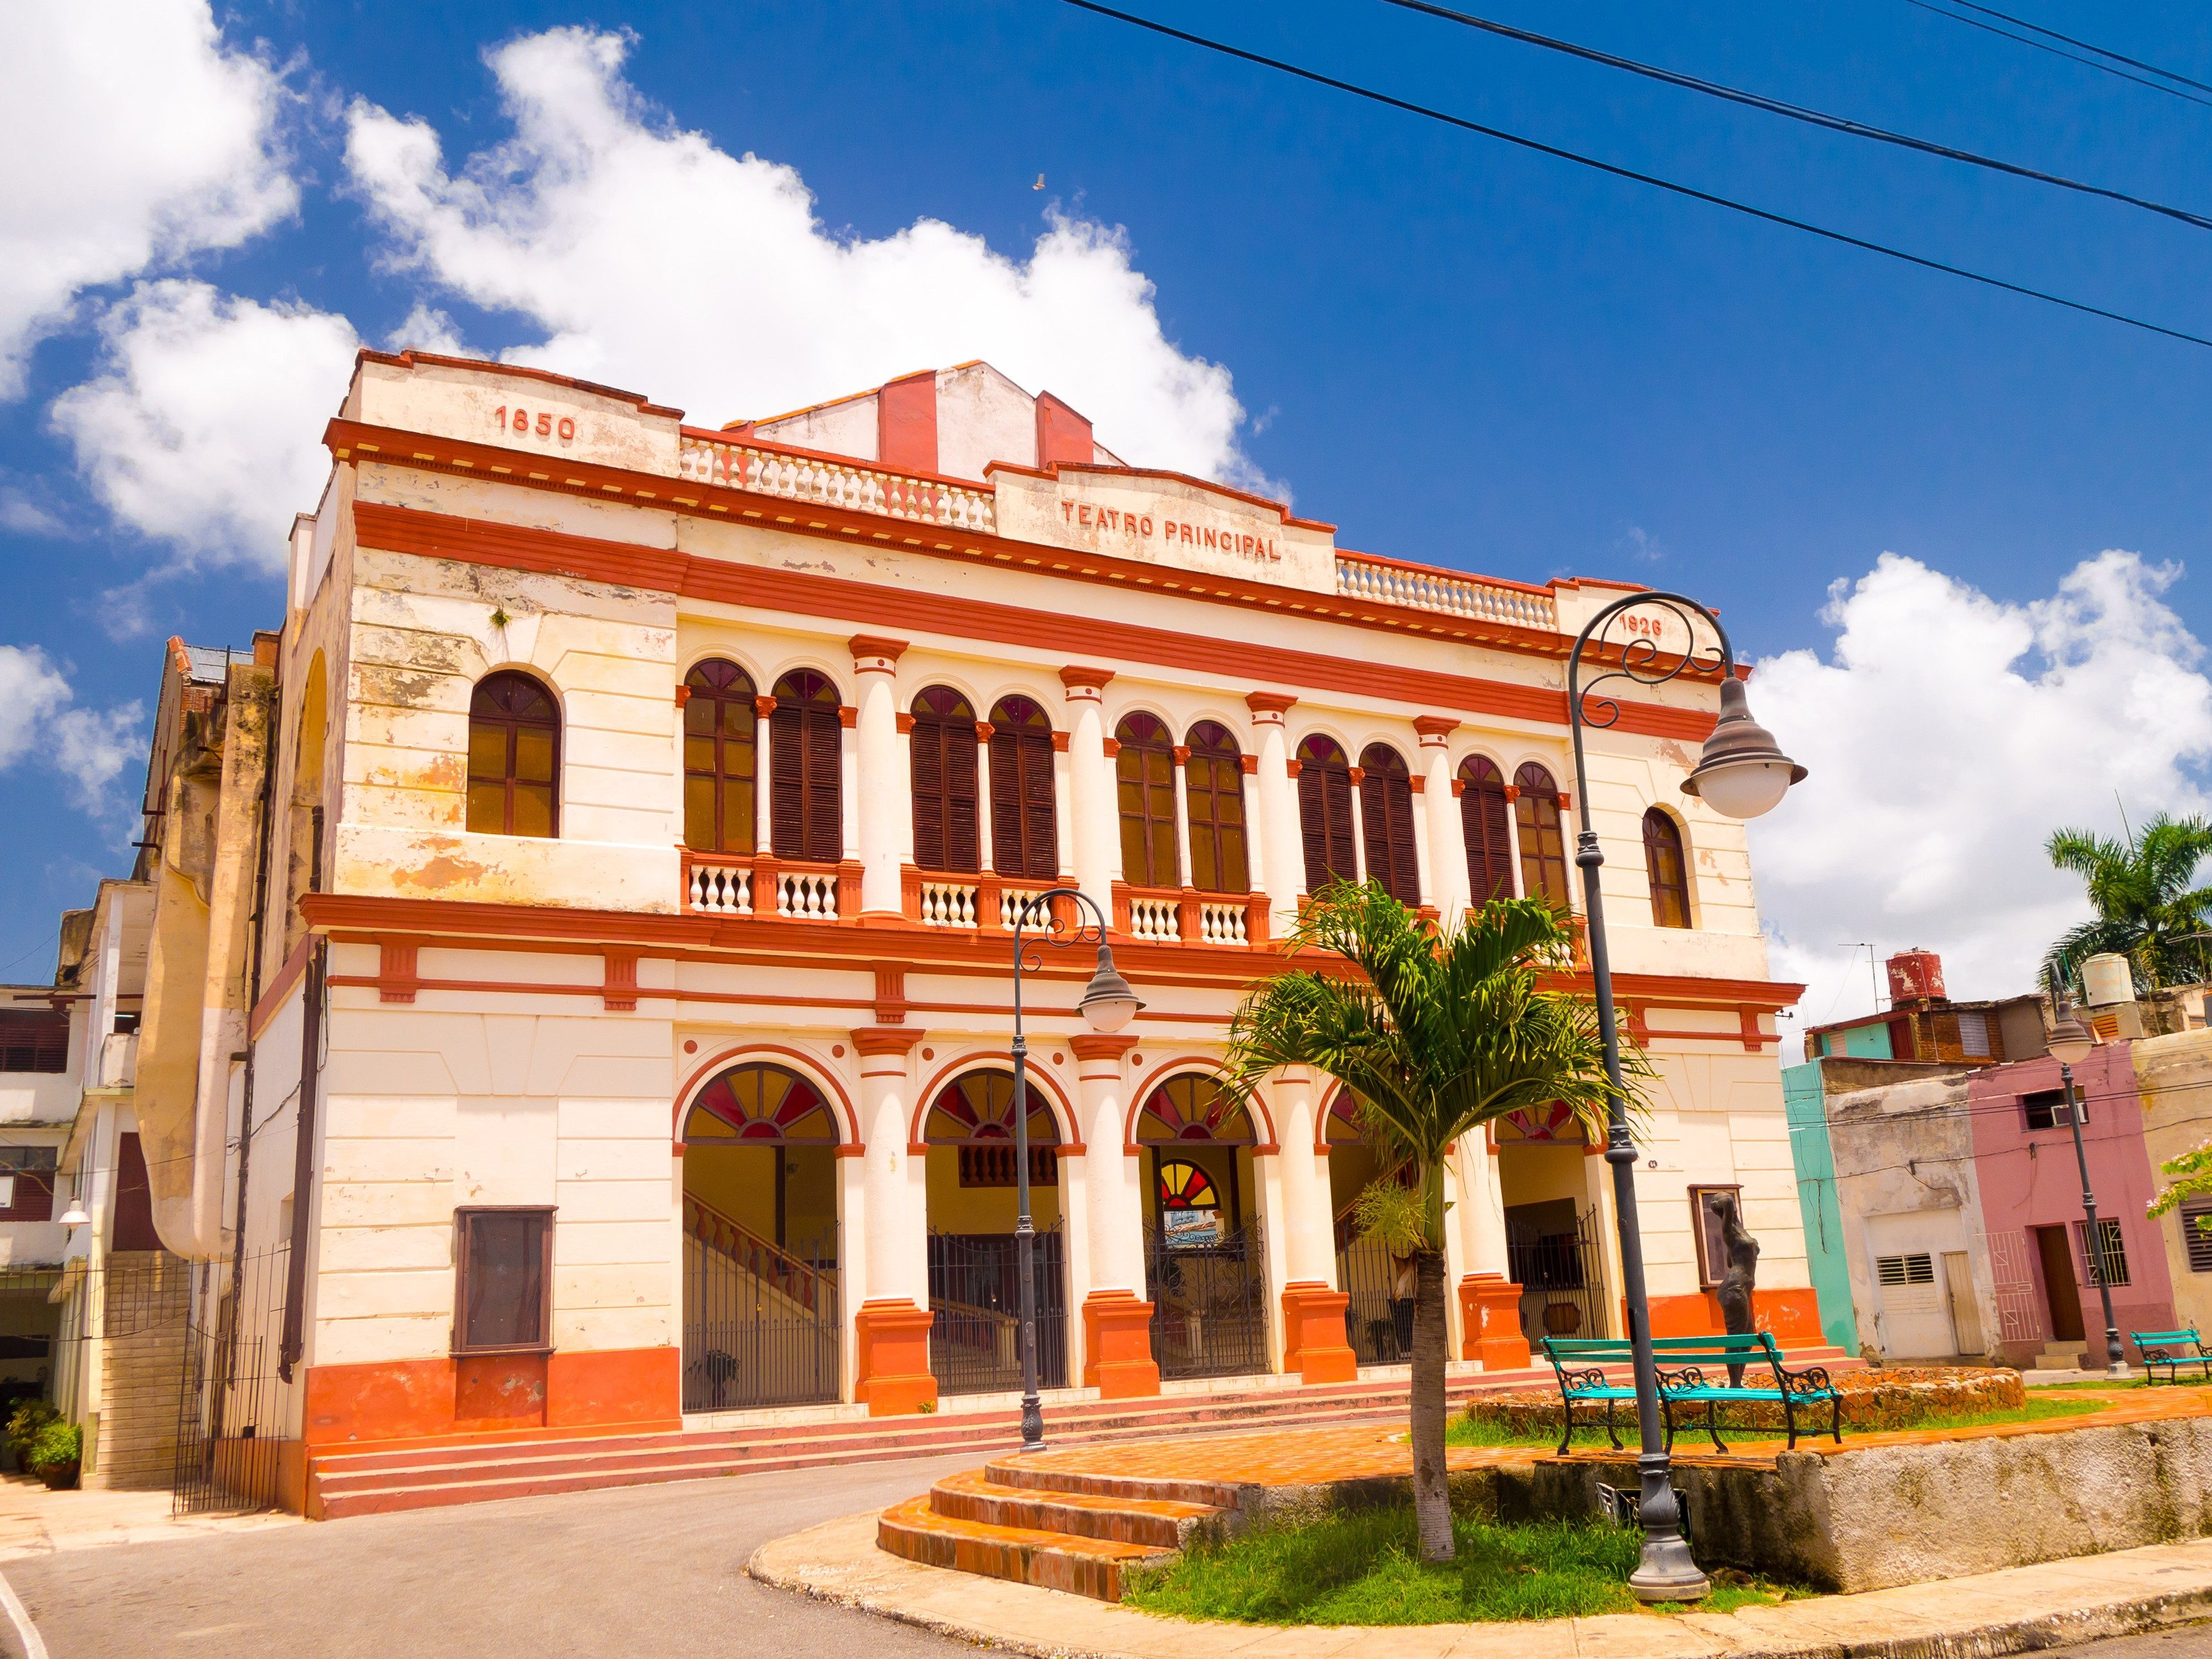 7. Camaguey, Cuba